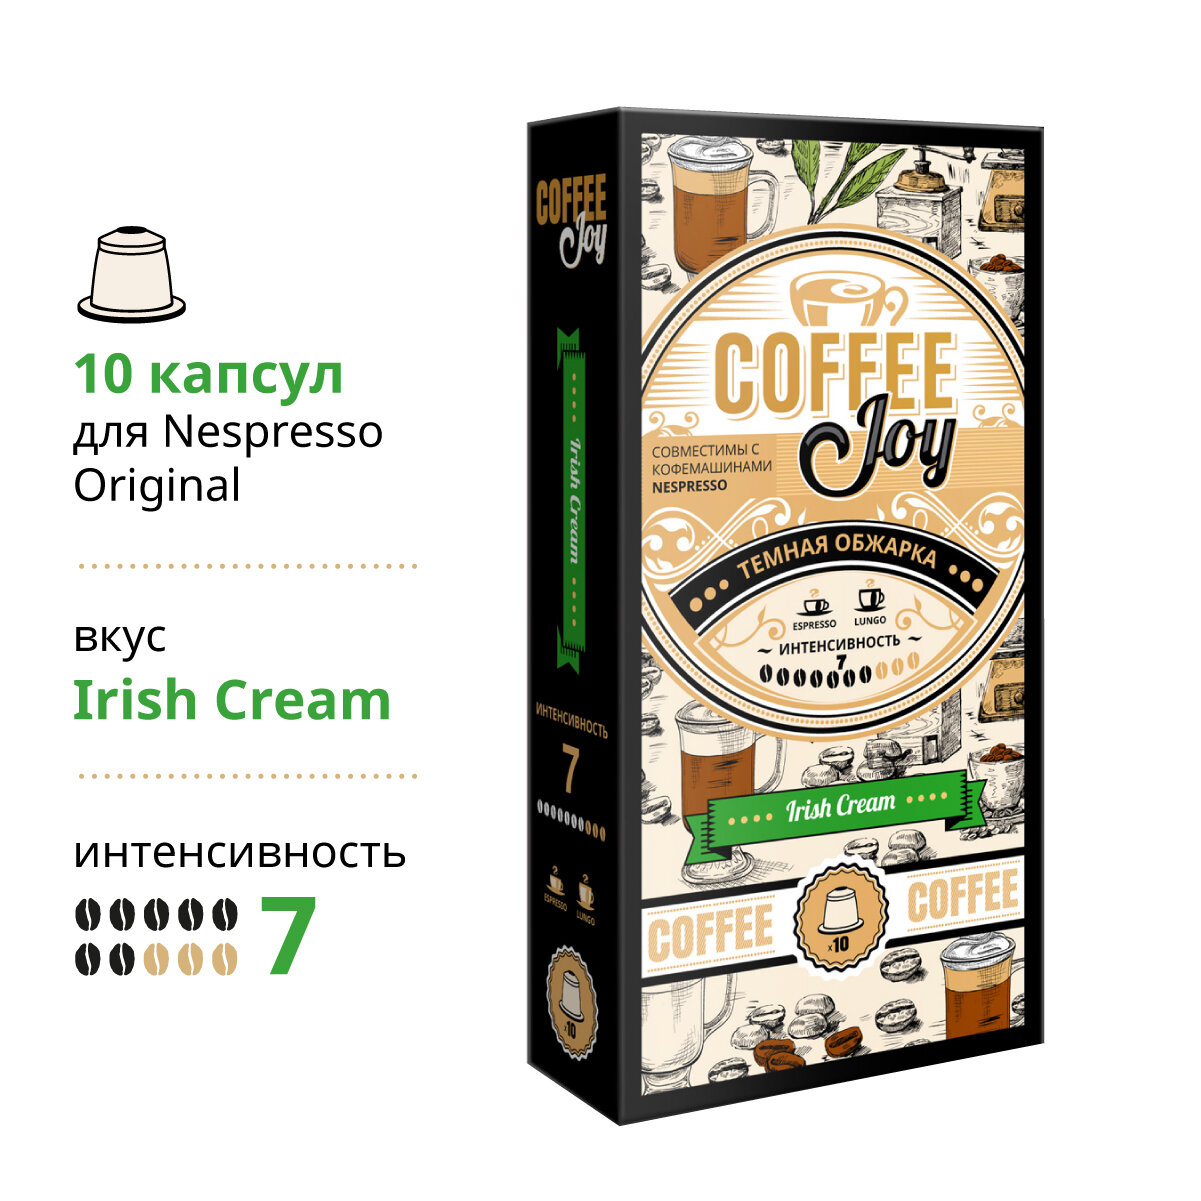 Кофе в капсулах Coffee Joy "Irish Cream", формата Nespresso (Неспрессо), 10 шт. - фотография № 1